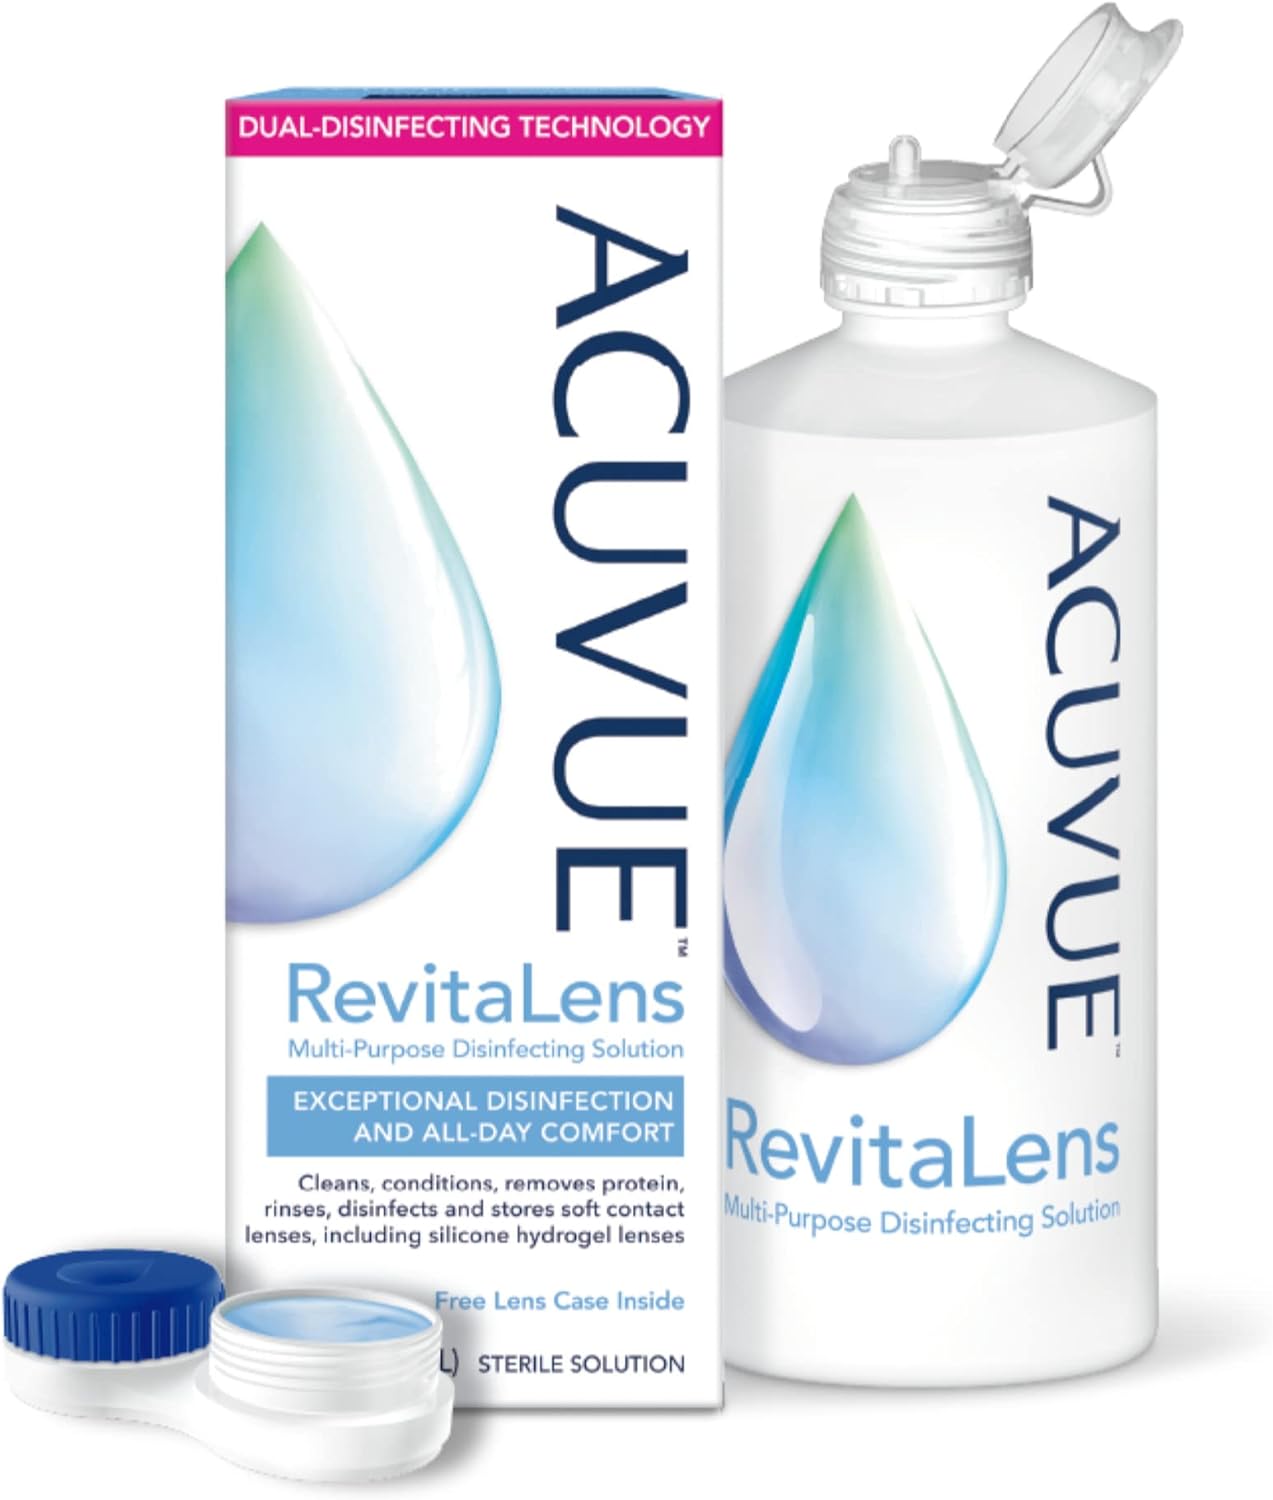 ACUVUE® RevitaLens Multi-Purpose Disinfecting Solution, 10 oz